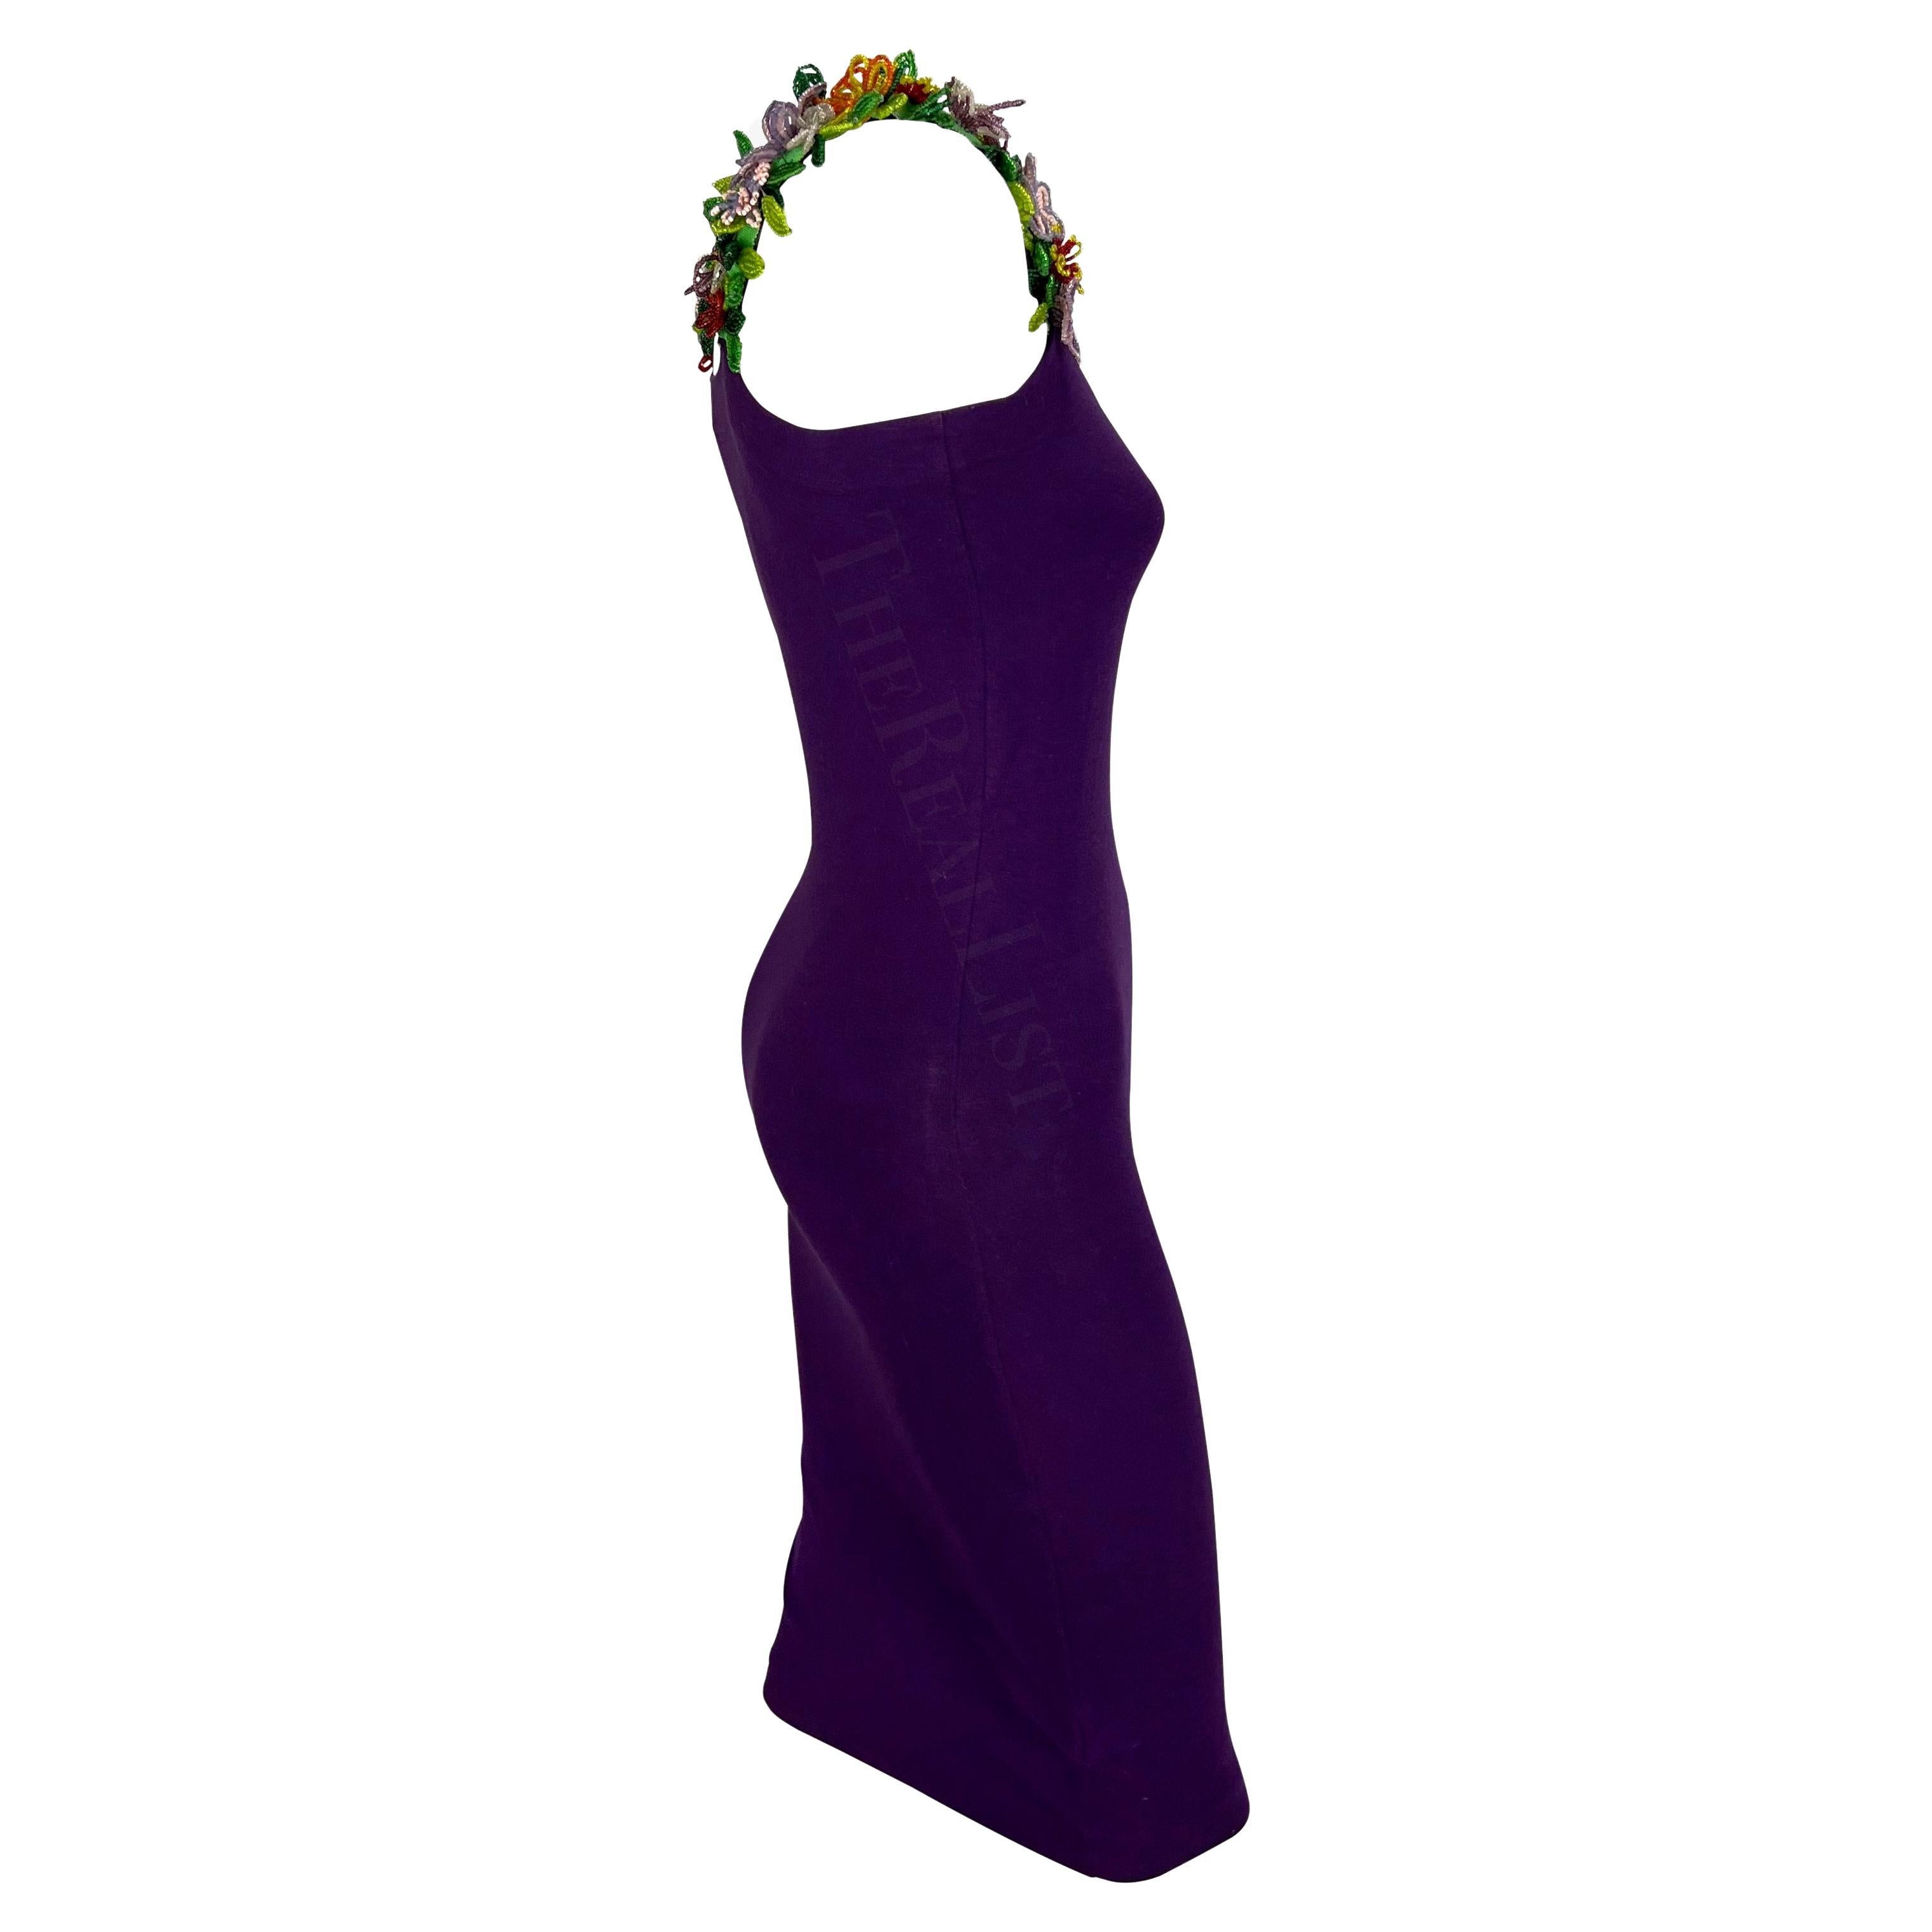 S/S 1992 Dolce & Gabbana Purple Mini Dress Floral Beaded Straps For Sale 6